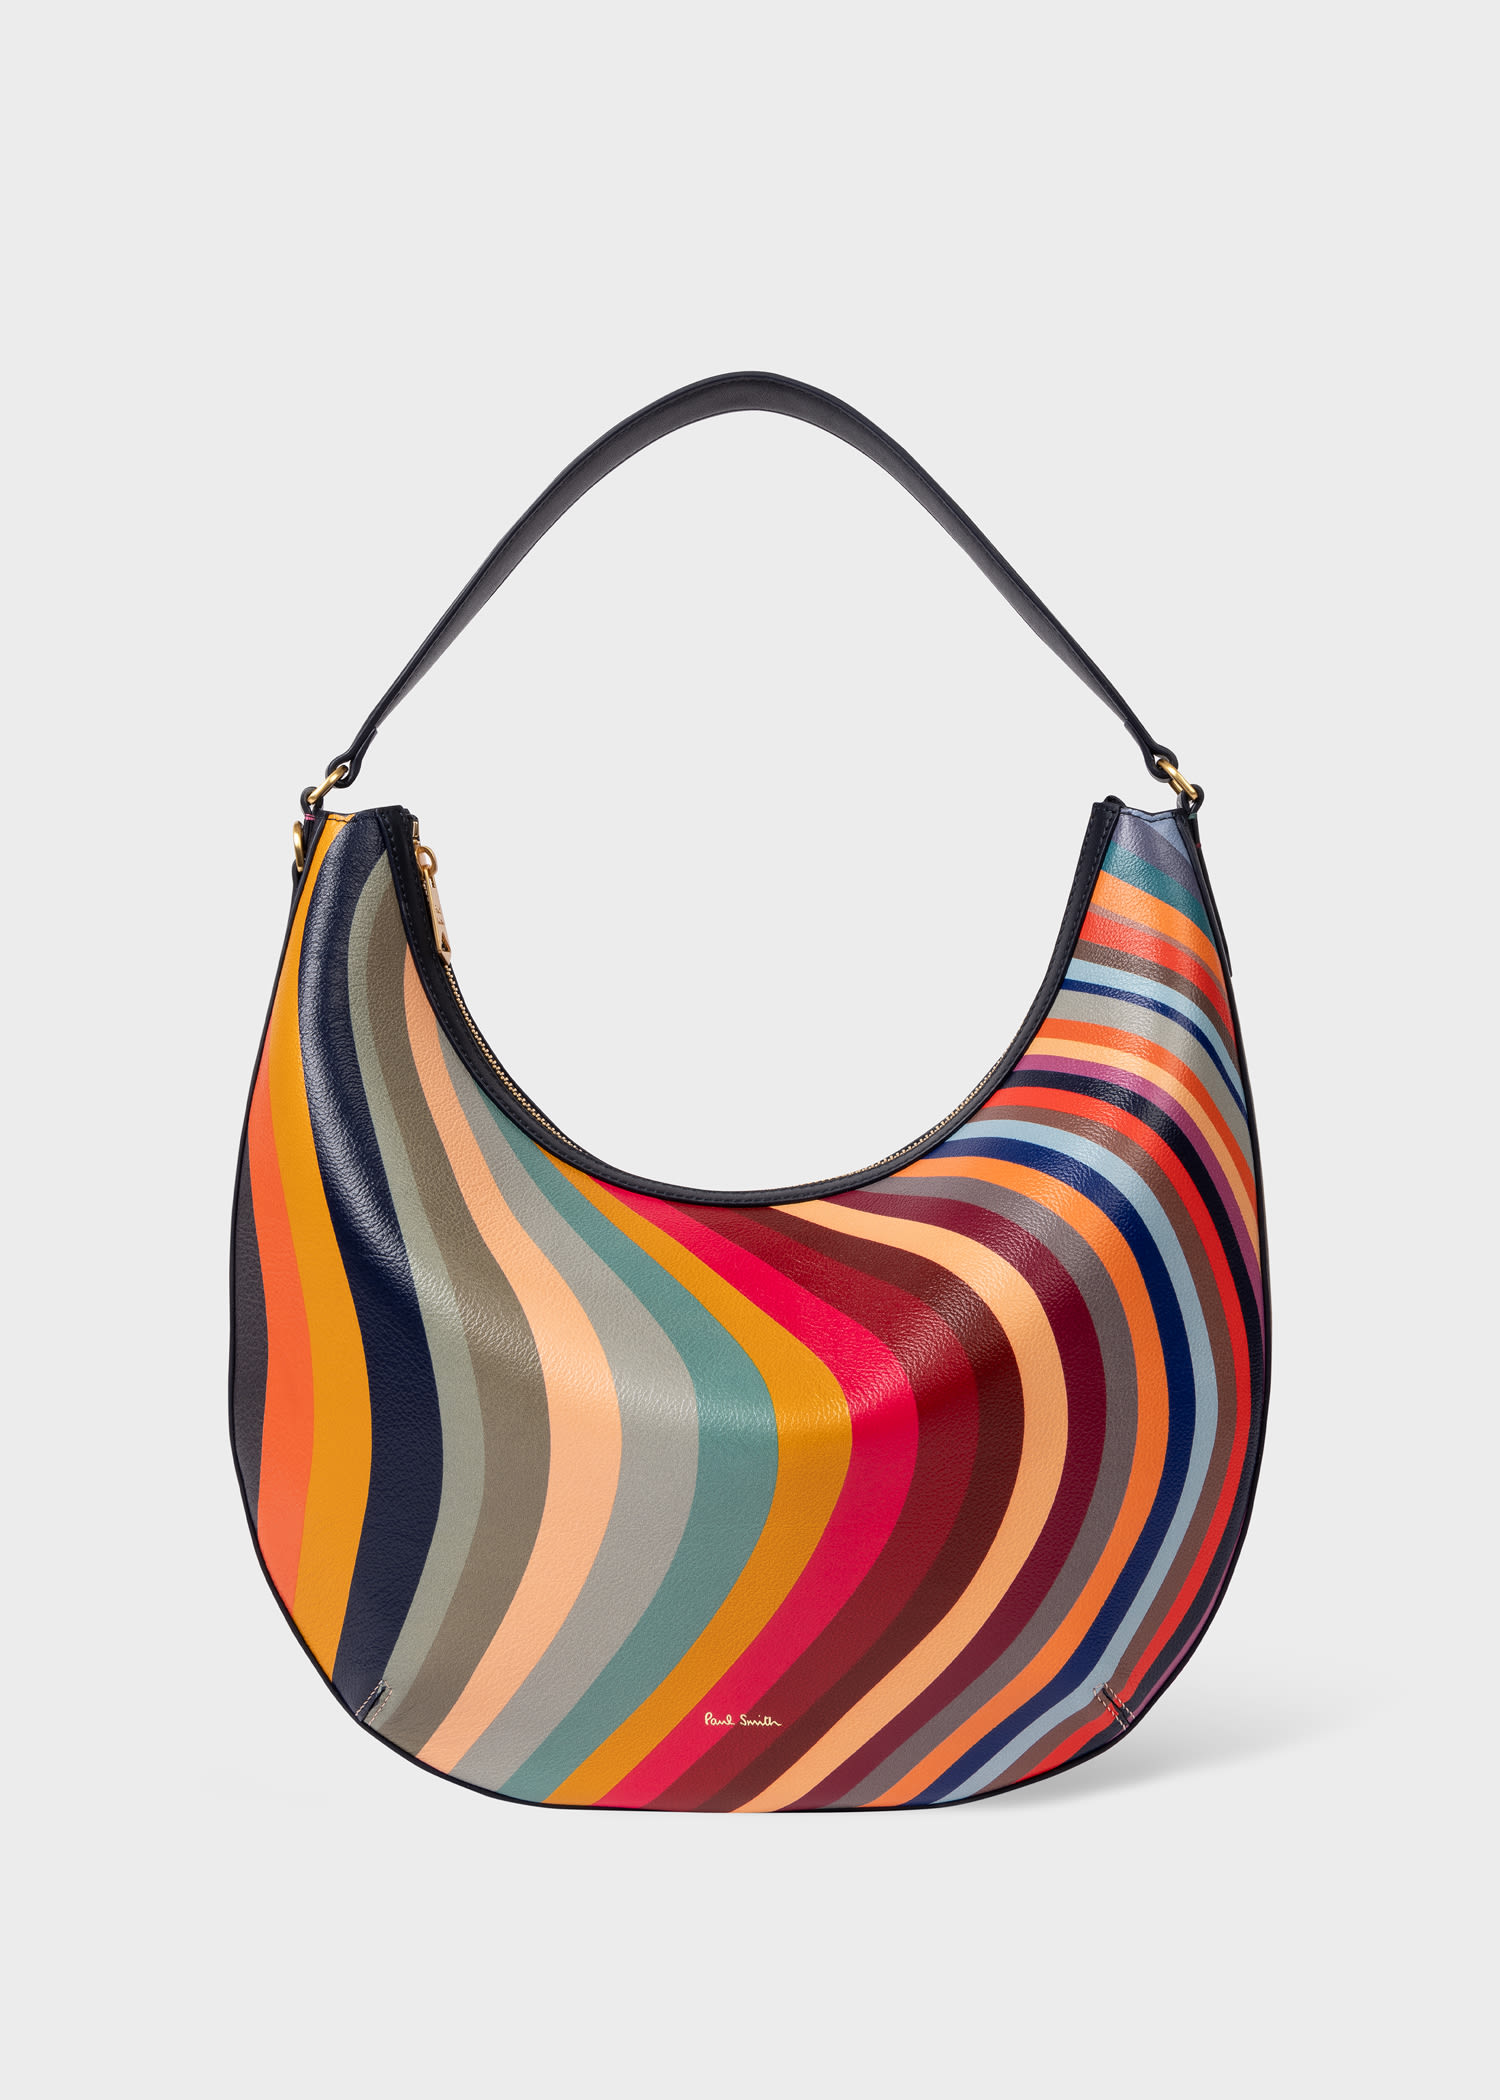 Swirl' Leather Round Hobo Bag